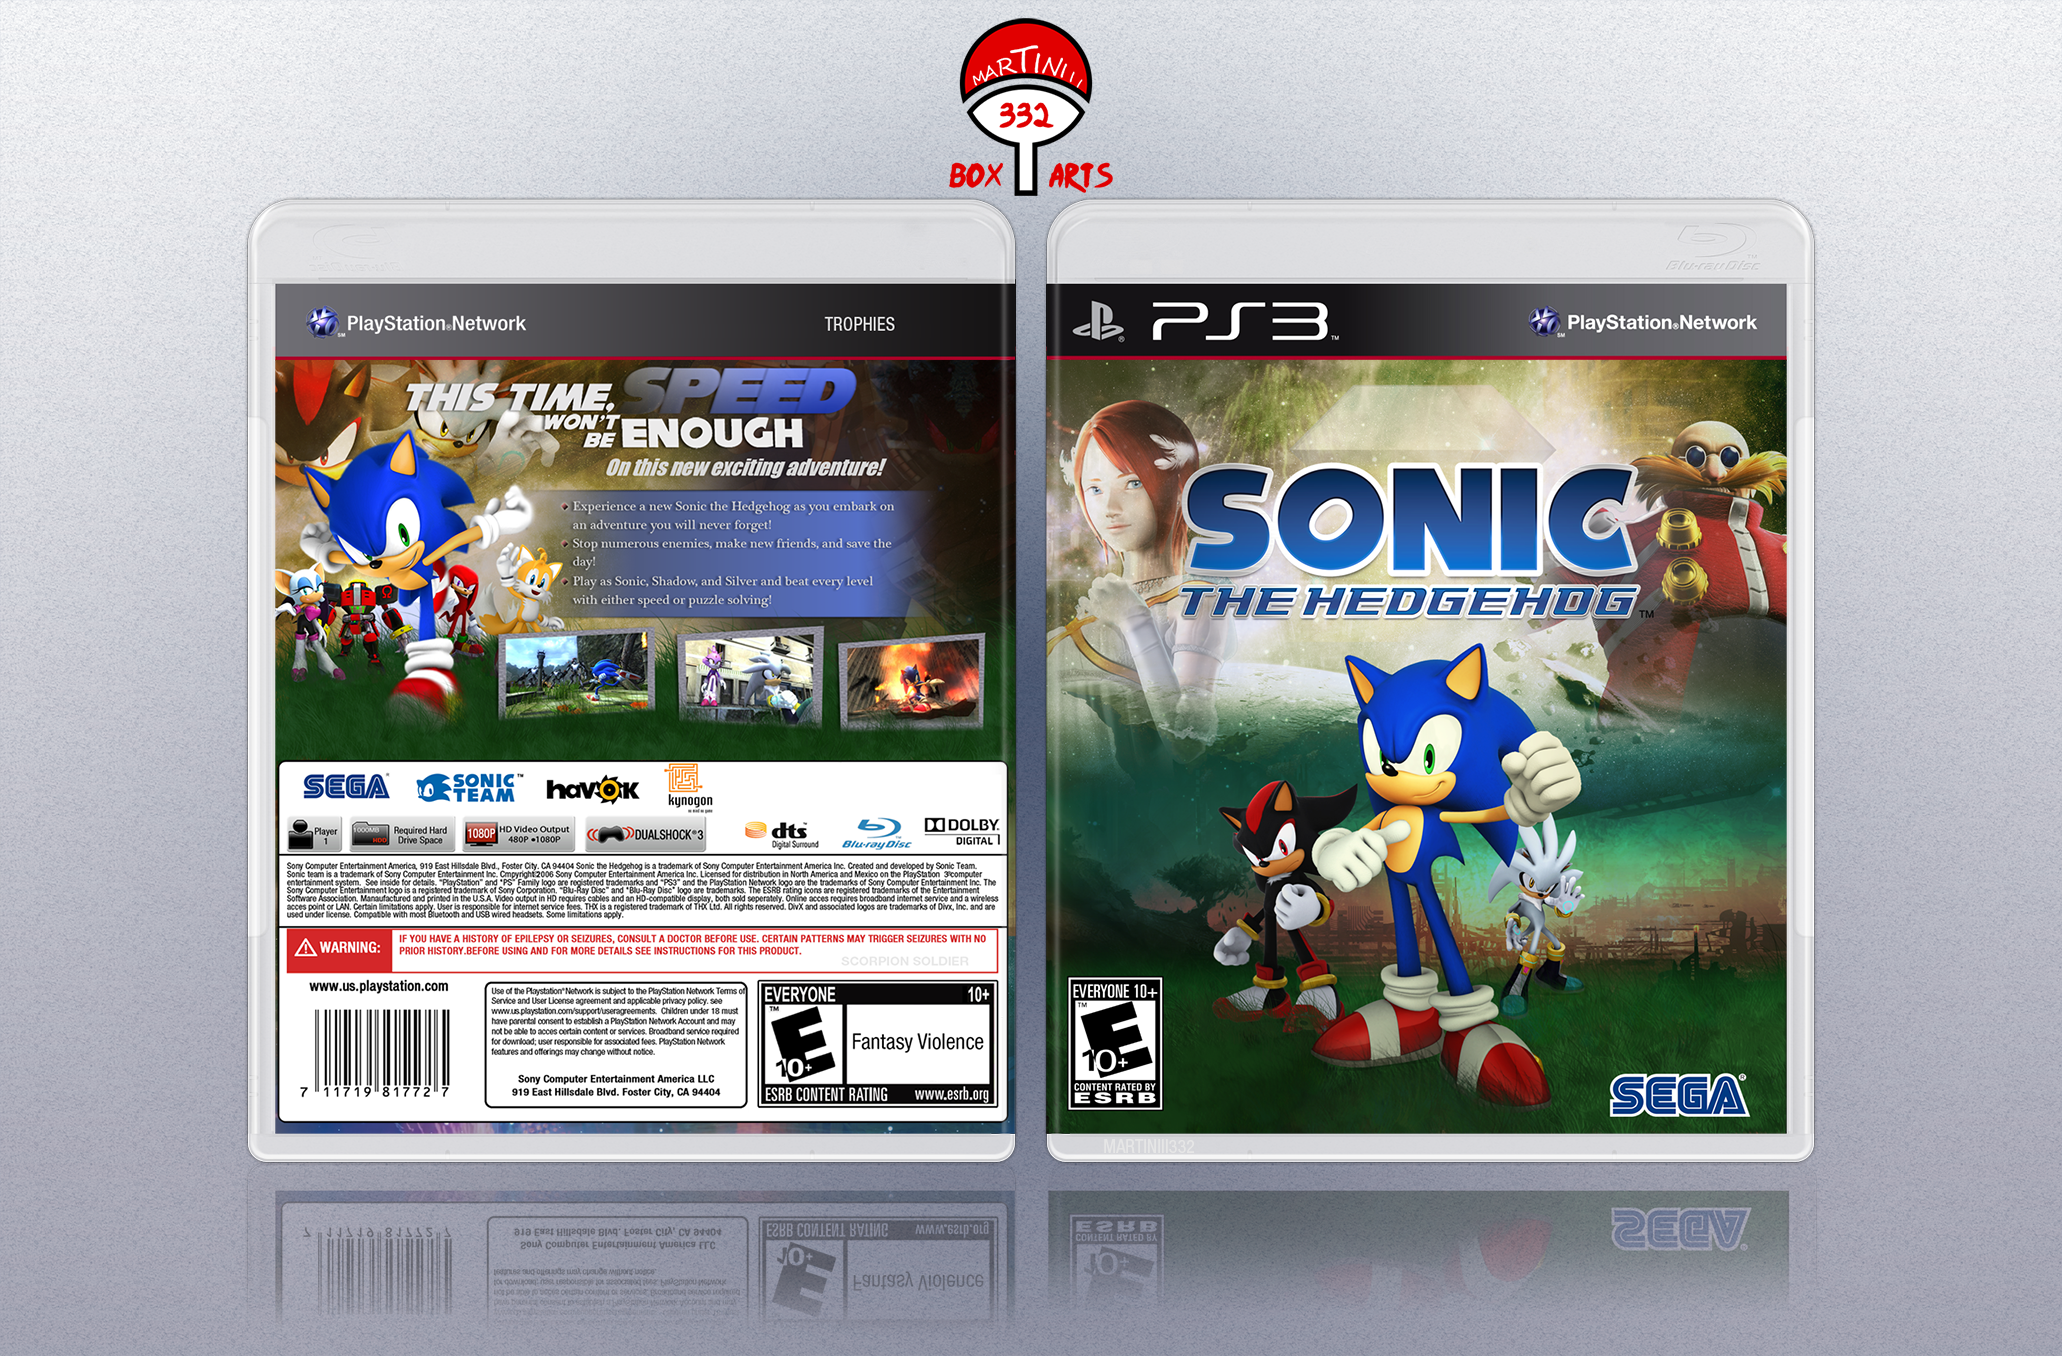 Sonic The Hedgehog 2006 Pc Demo Downloadl